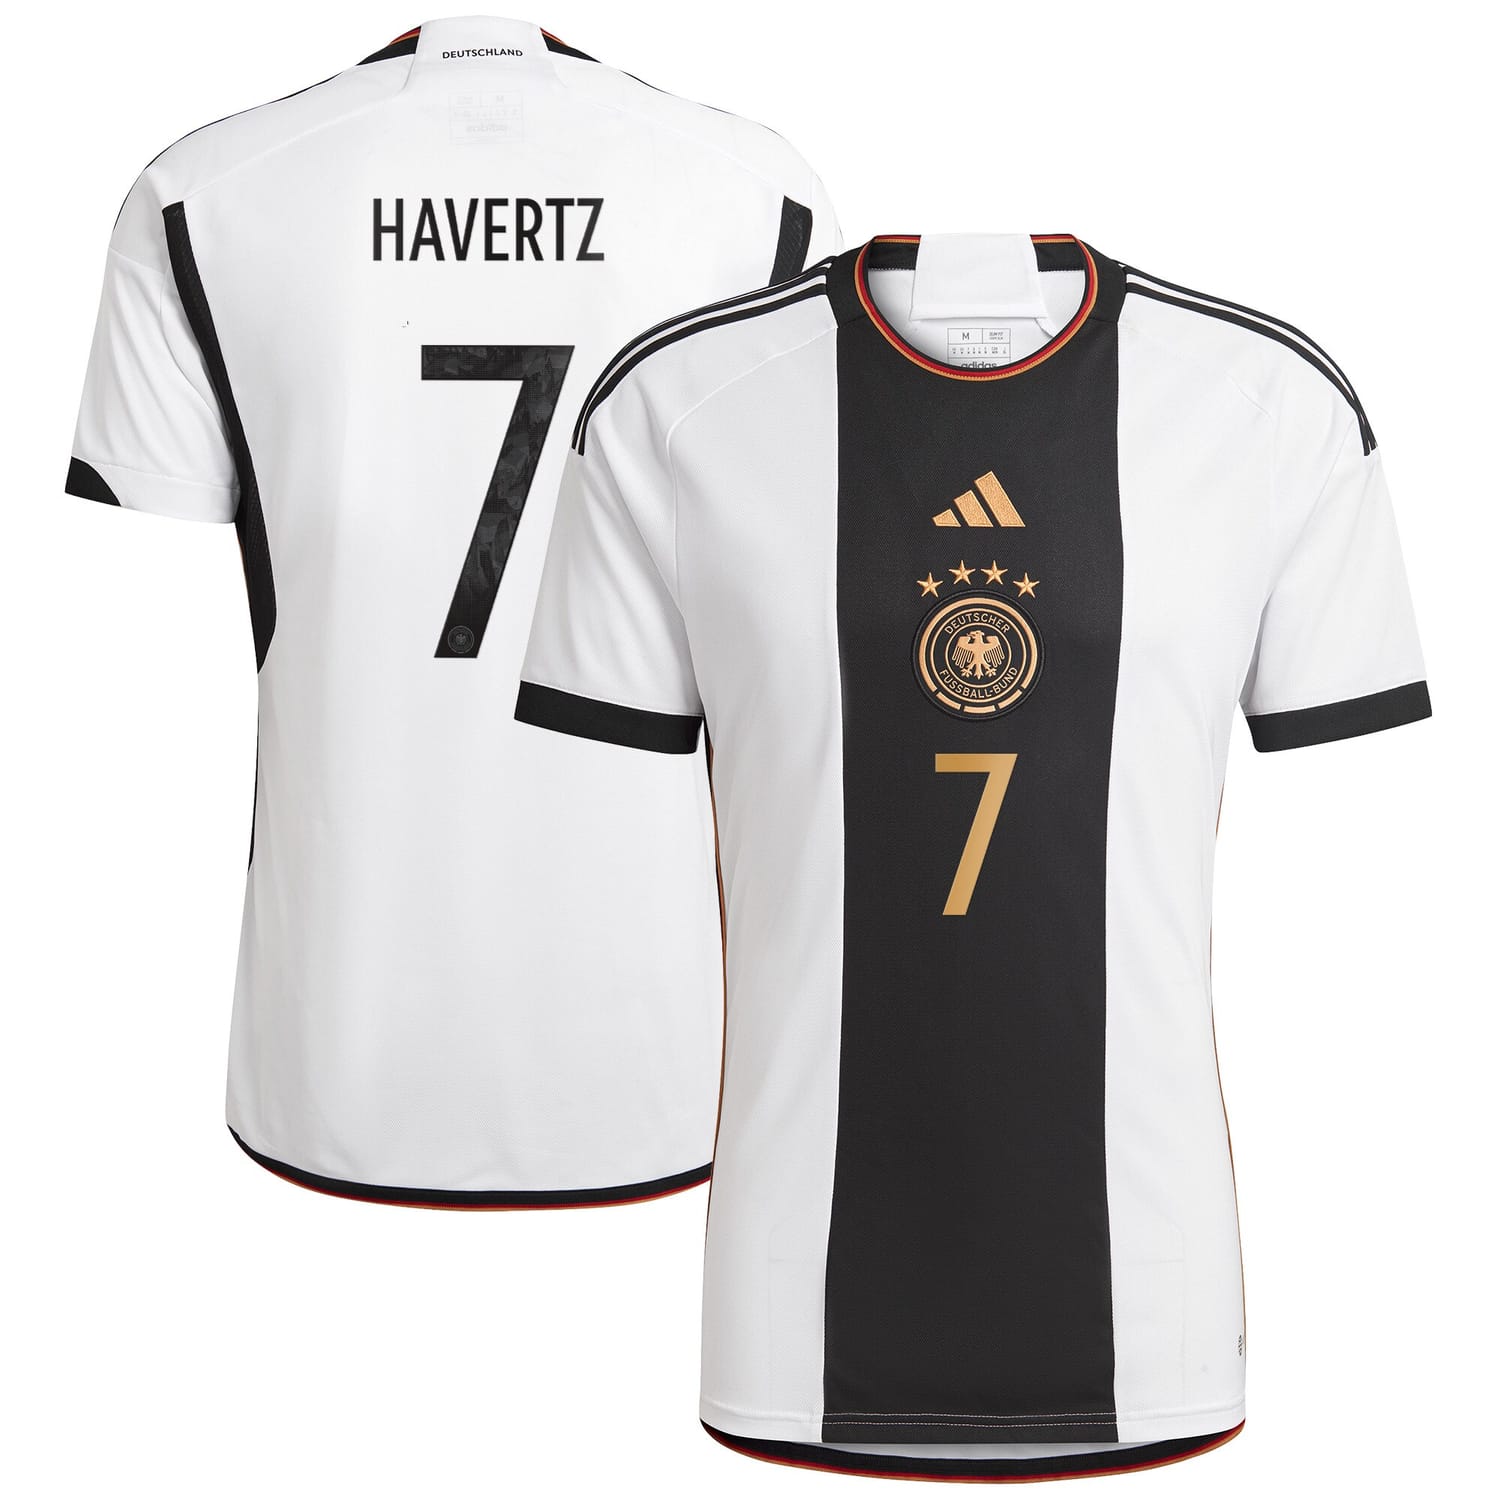 Germany National Team Home Jersey Shirt player Kai Havertz 7 printing for Men